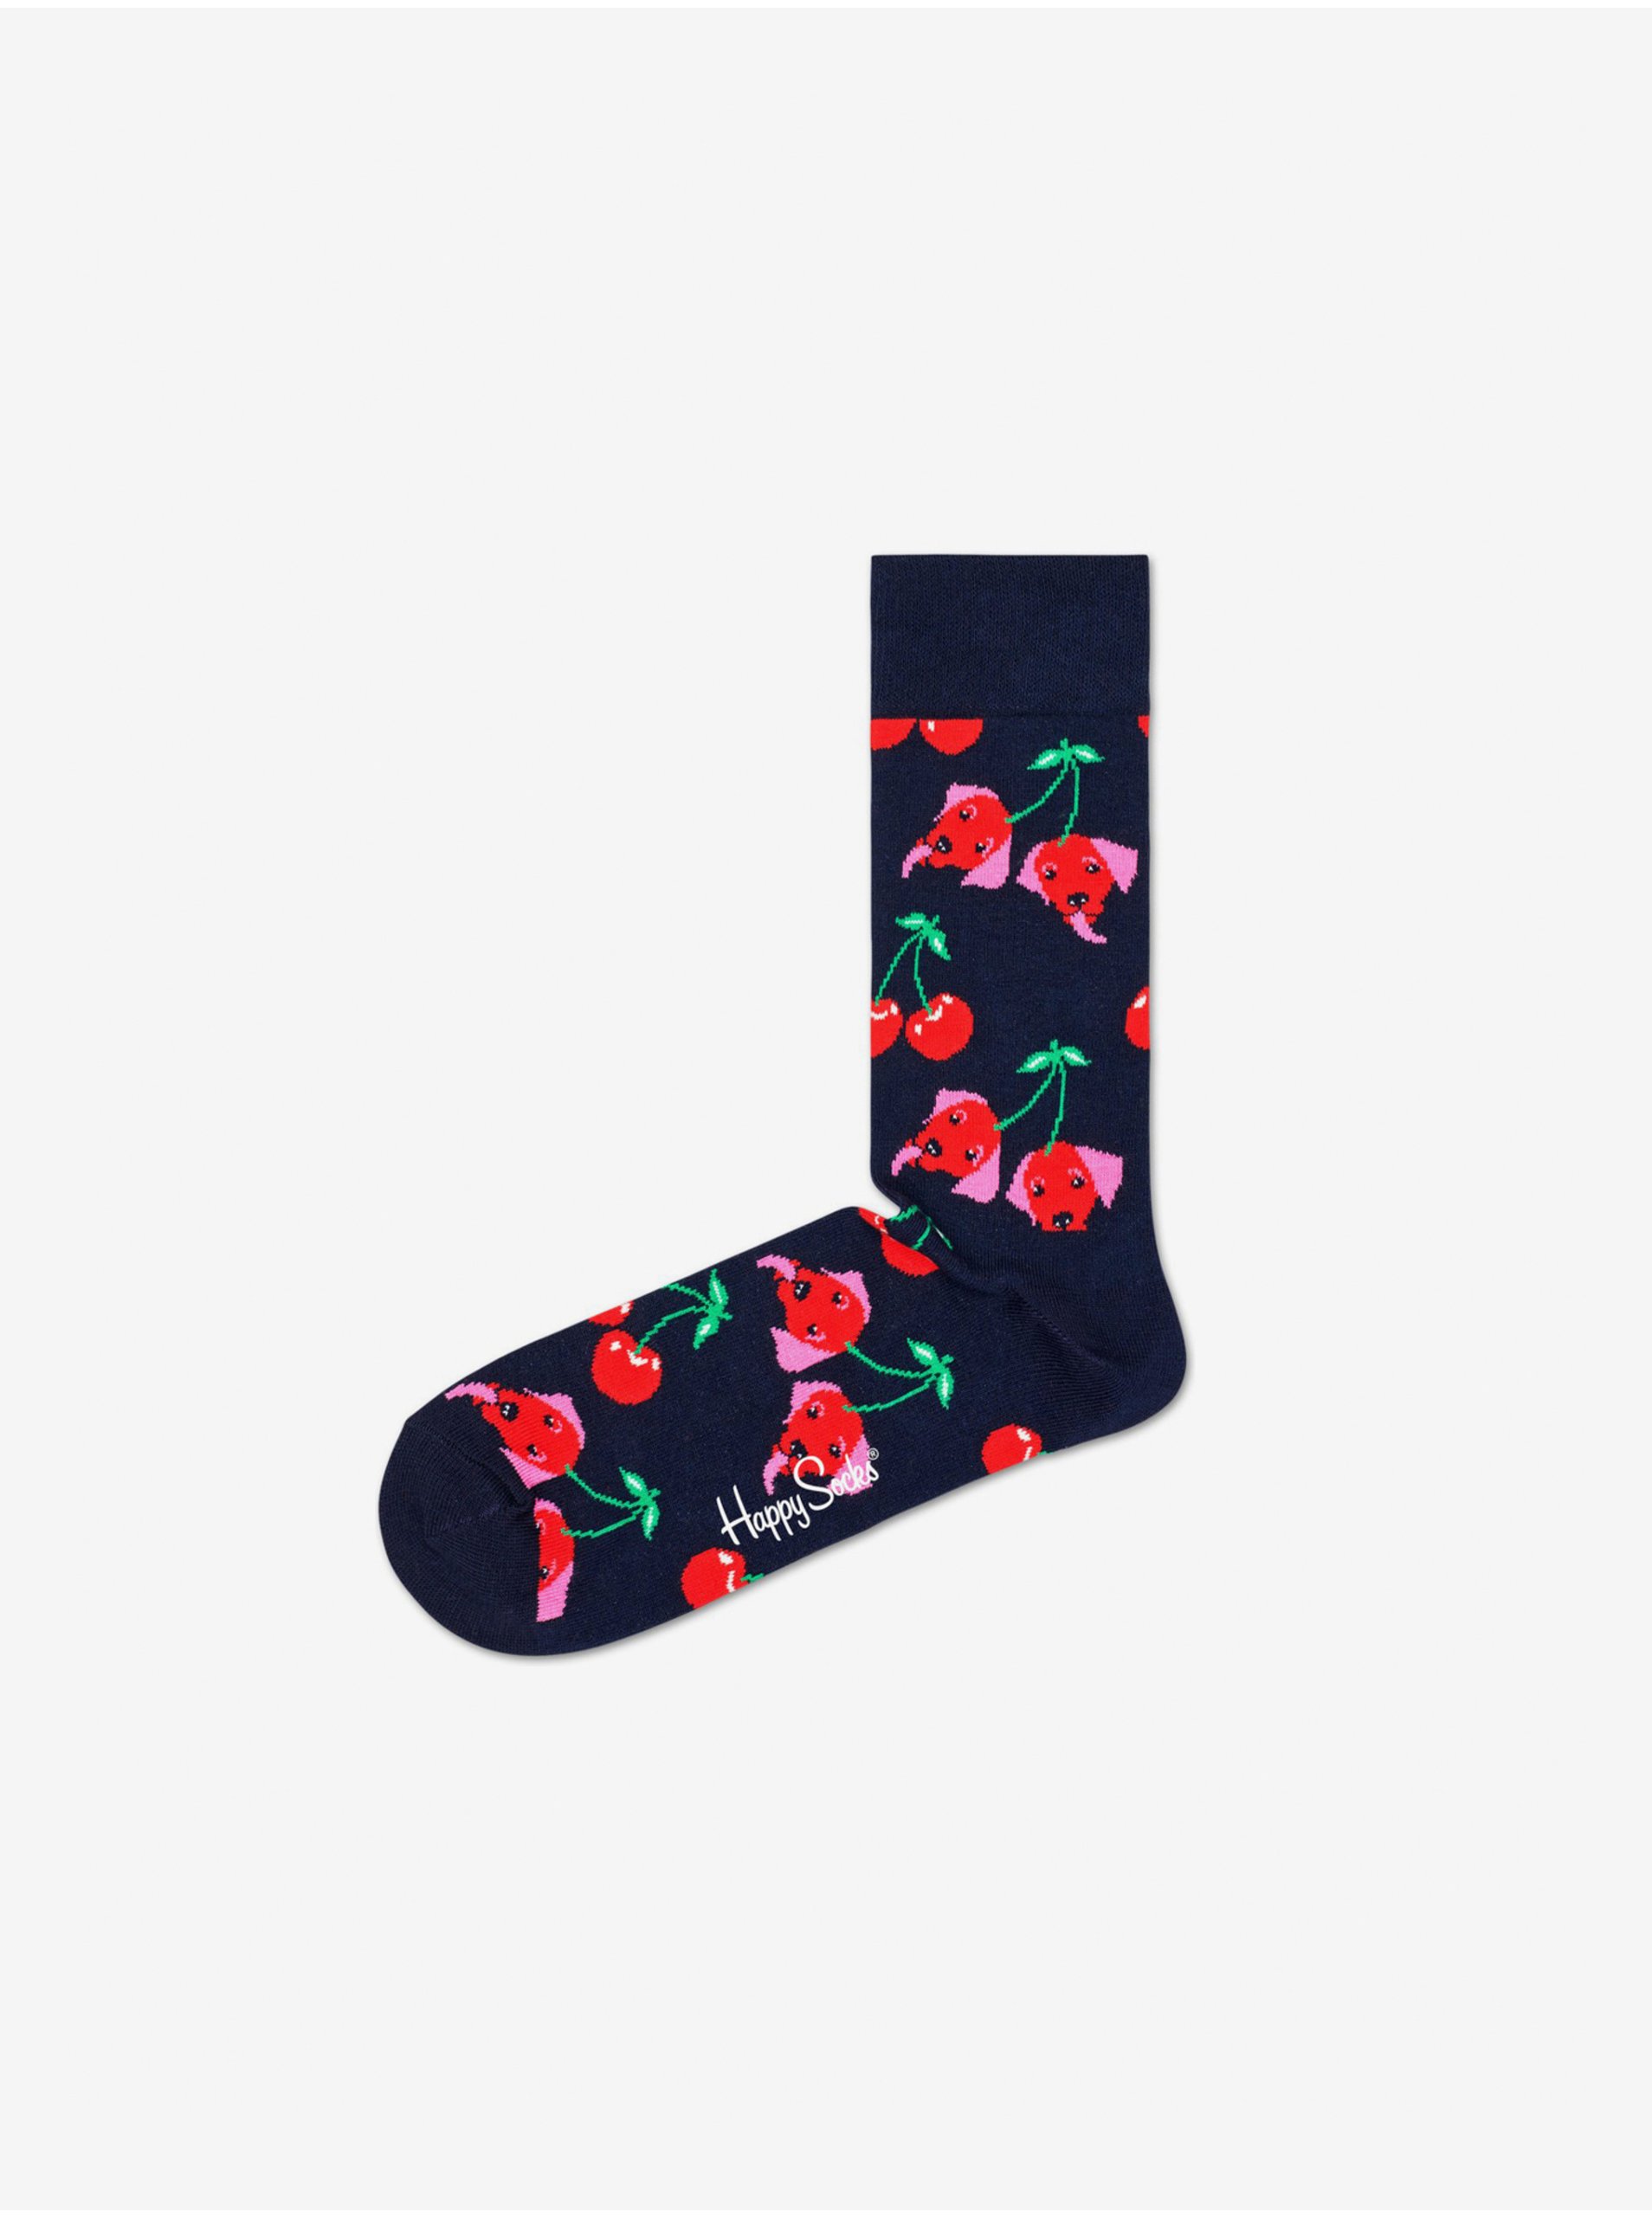 Lacno Cherry Dog Ponožky Happy Socks